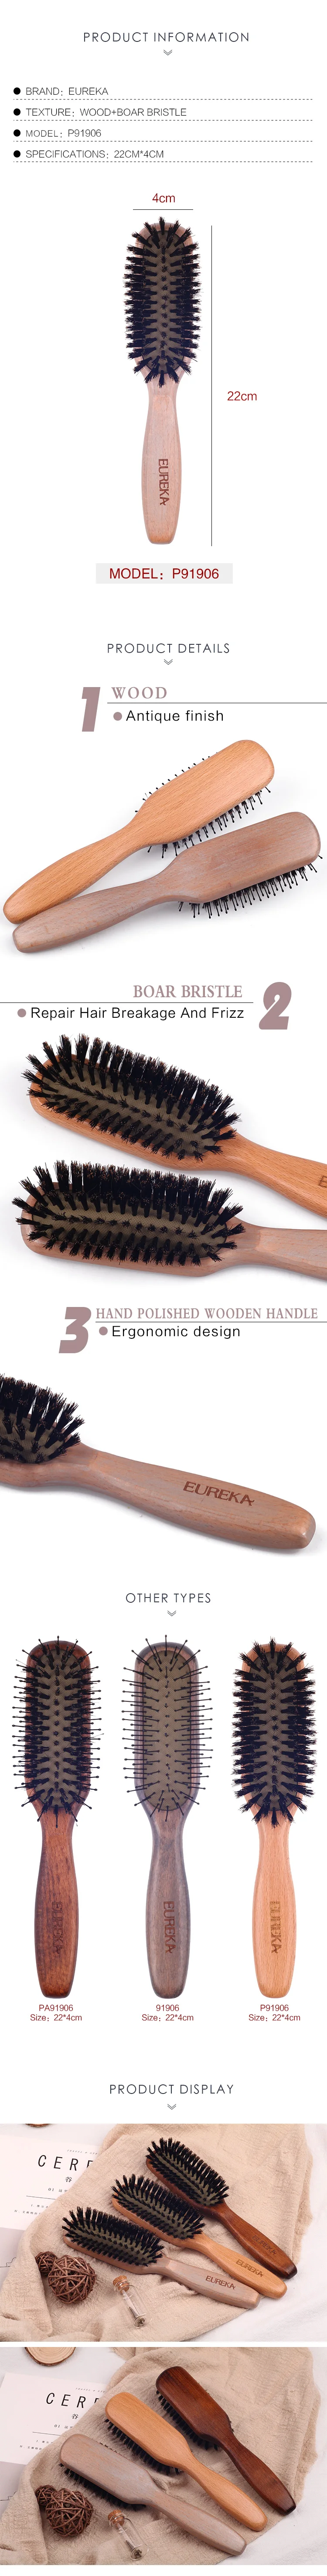 EUREKA P91906 Engraved Boar Bristle Hair Brush Wood Hair Brush Massage Classical Style Hair Brush